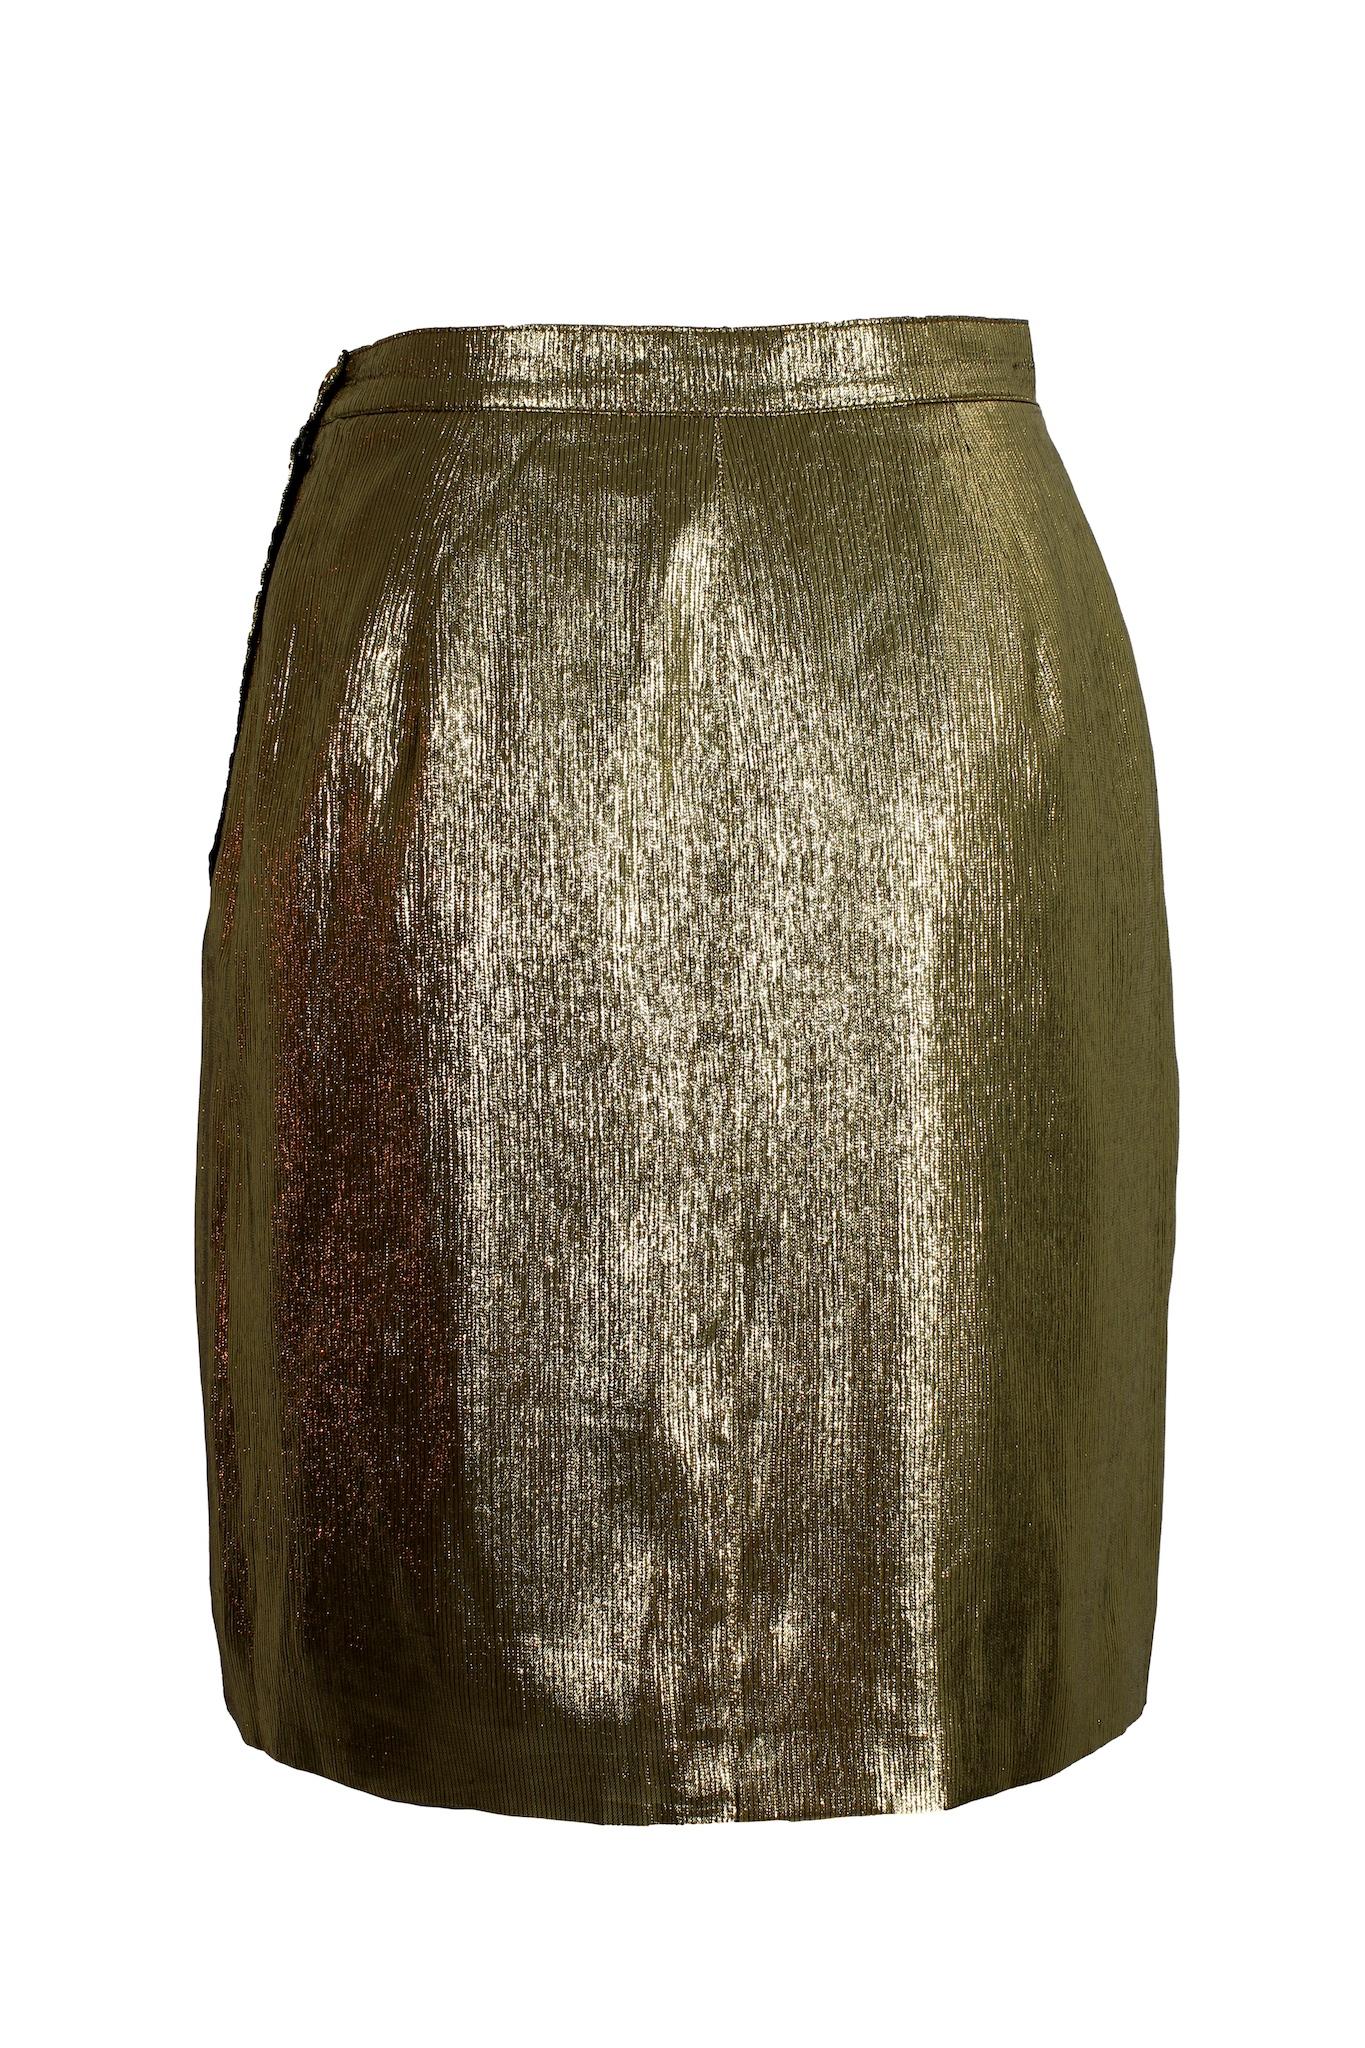 Genny elegant vintage 80s skirt. Short skirt on the knee, sheath model, gold color, 74% silk, 26% lurex fabric. Made in italy.

Size: 40 It 6 Us 8 Uk

Waist: 31 cm
Length: 50 cm